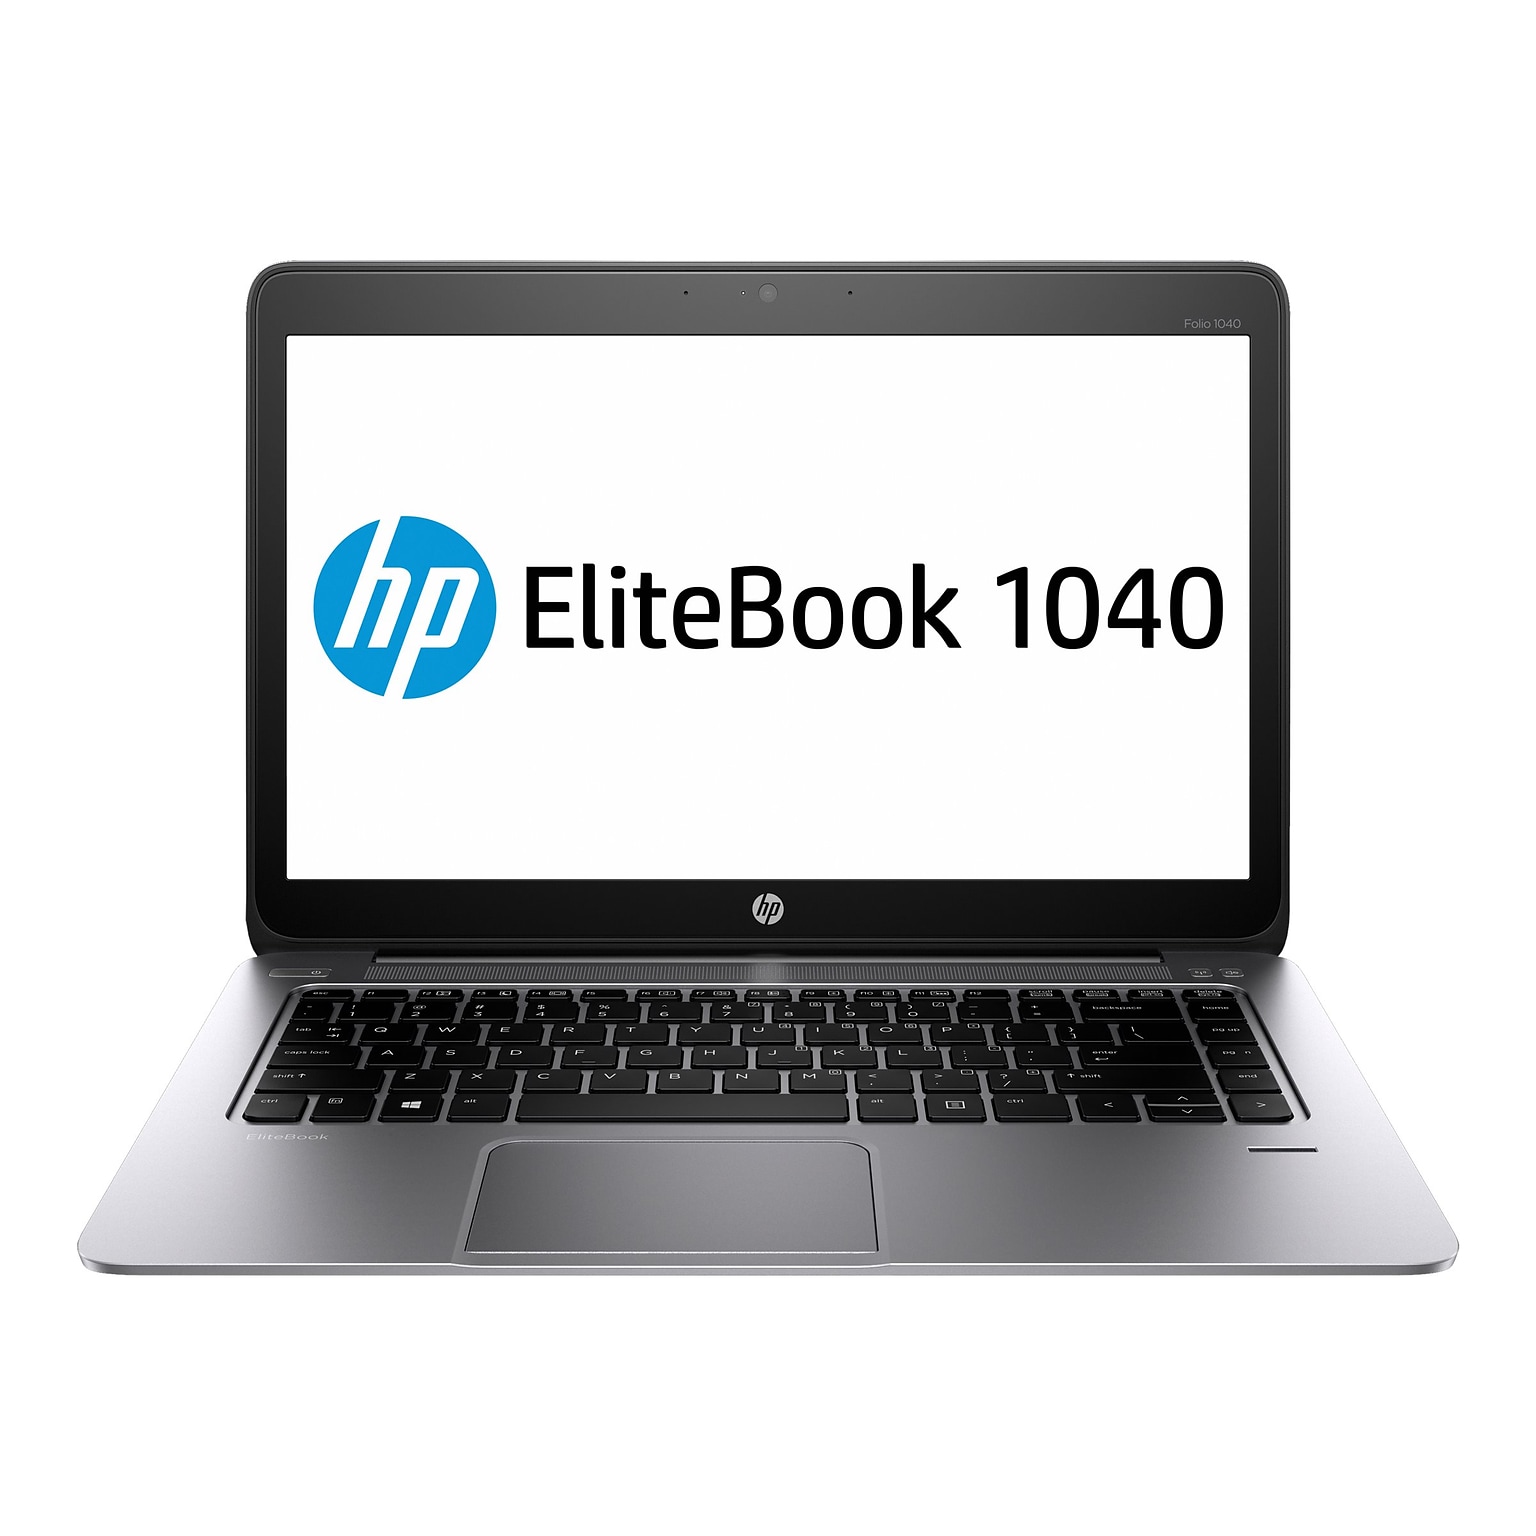 HP EliteBook Folio 1040 G2 14 Refurbished Notebook, Intel i5 2.2GHz Processor, 8GB Memory, 128GB SSD, Windows 10 Pro